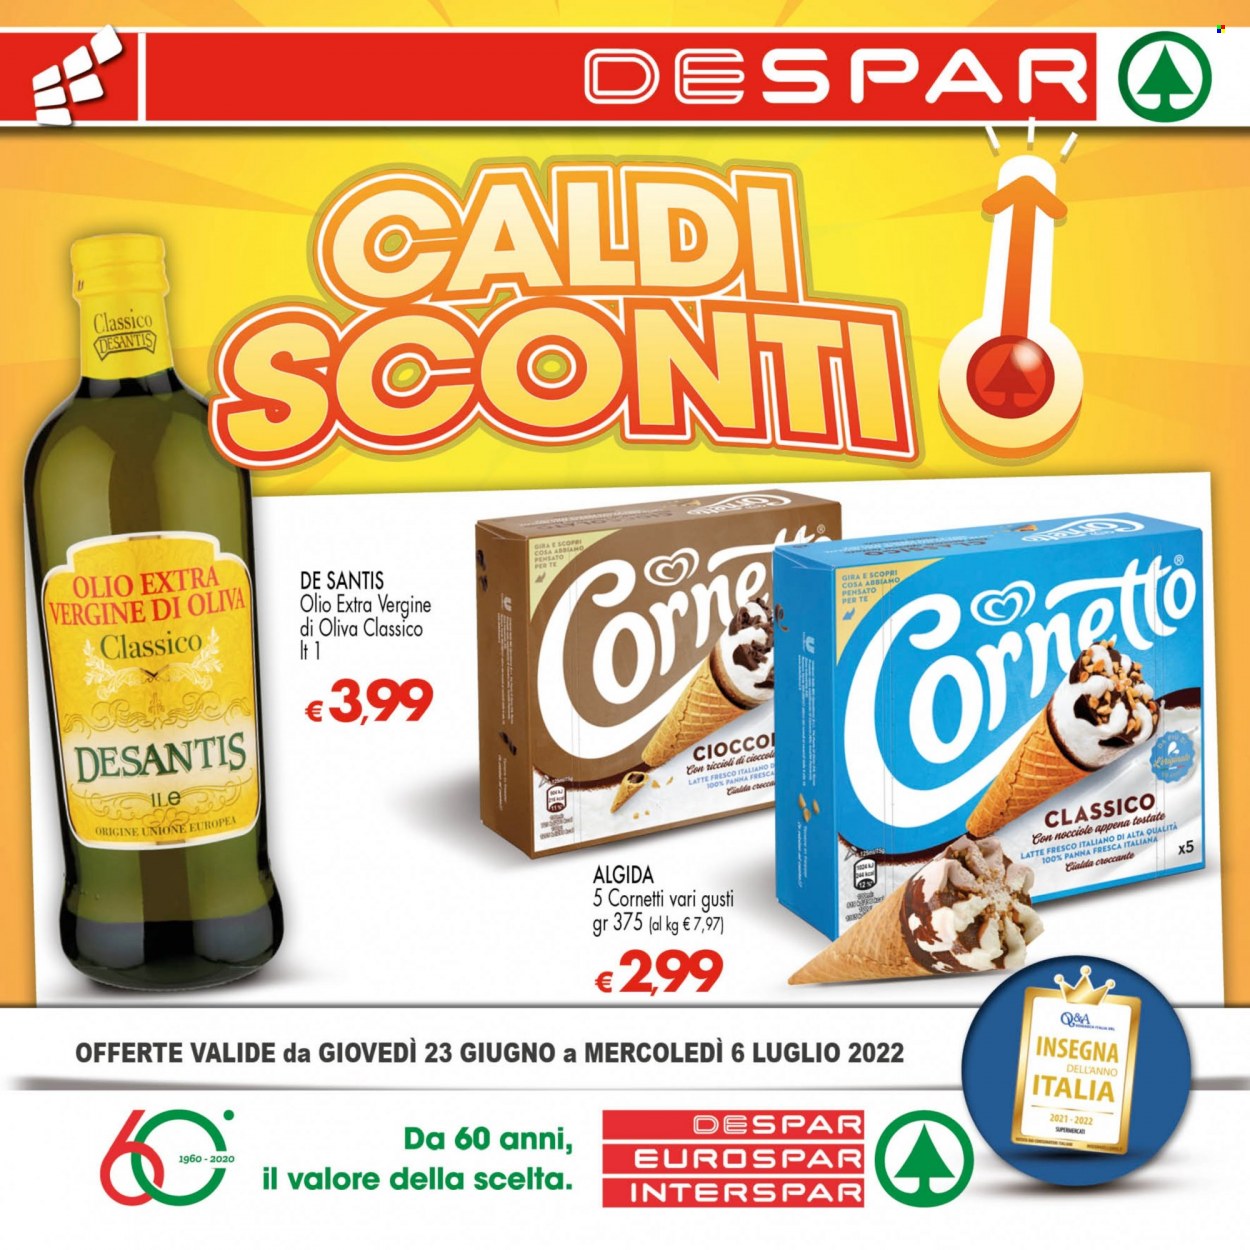 thumbnail - Volantino Despar - 23/6/2022 - 6/7/2022 - Prodotti in offerta - croissant, latte, gelato, Algida, olio, olio extra vergine di oliva. Pagina 1.